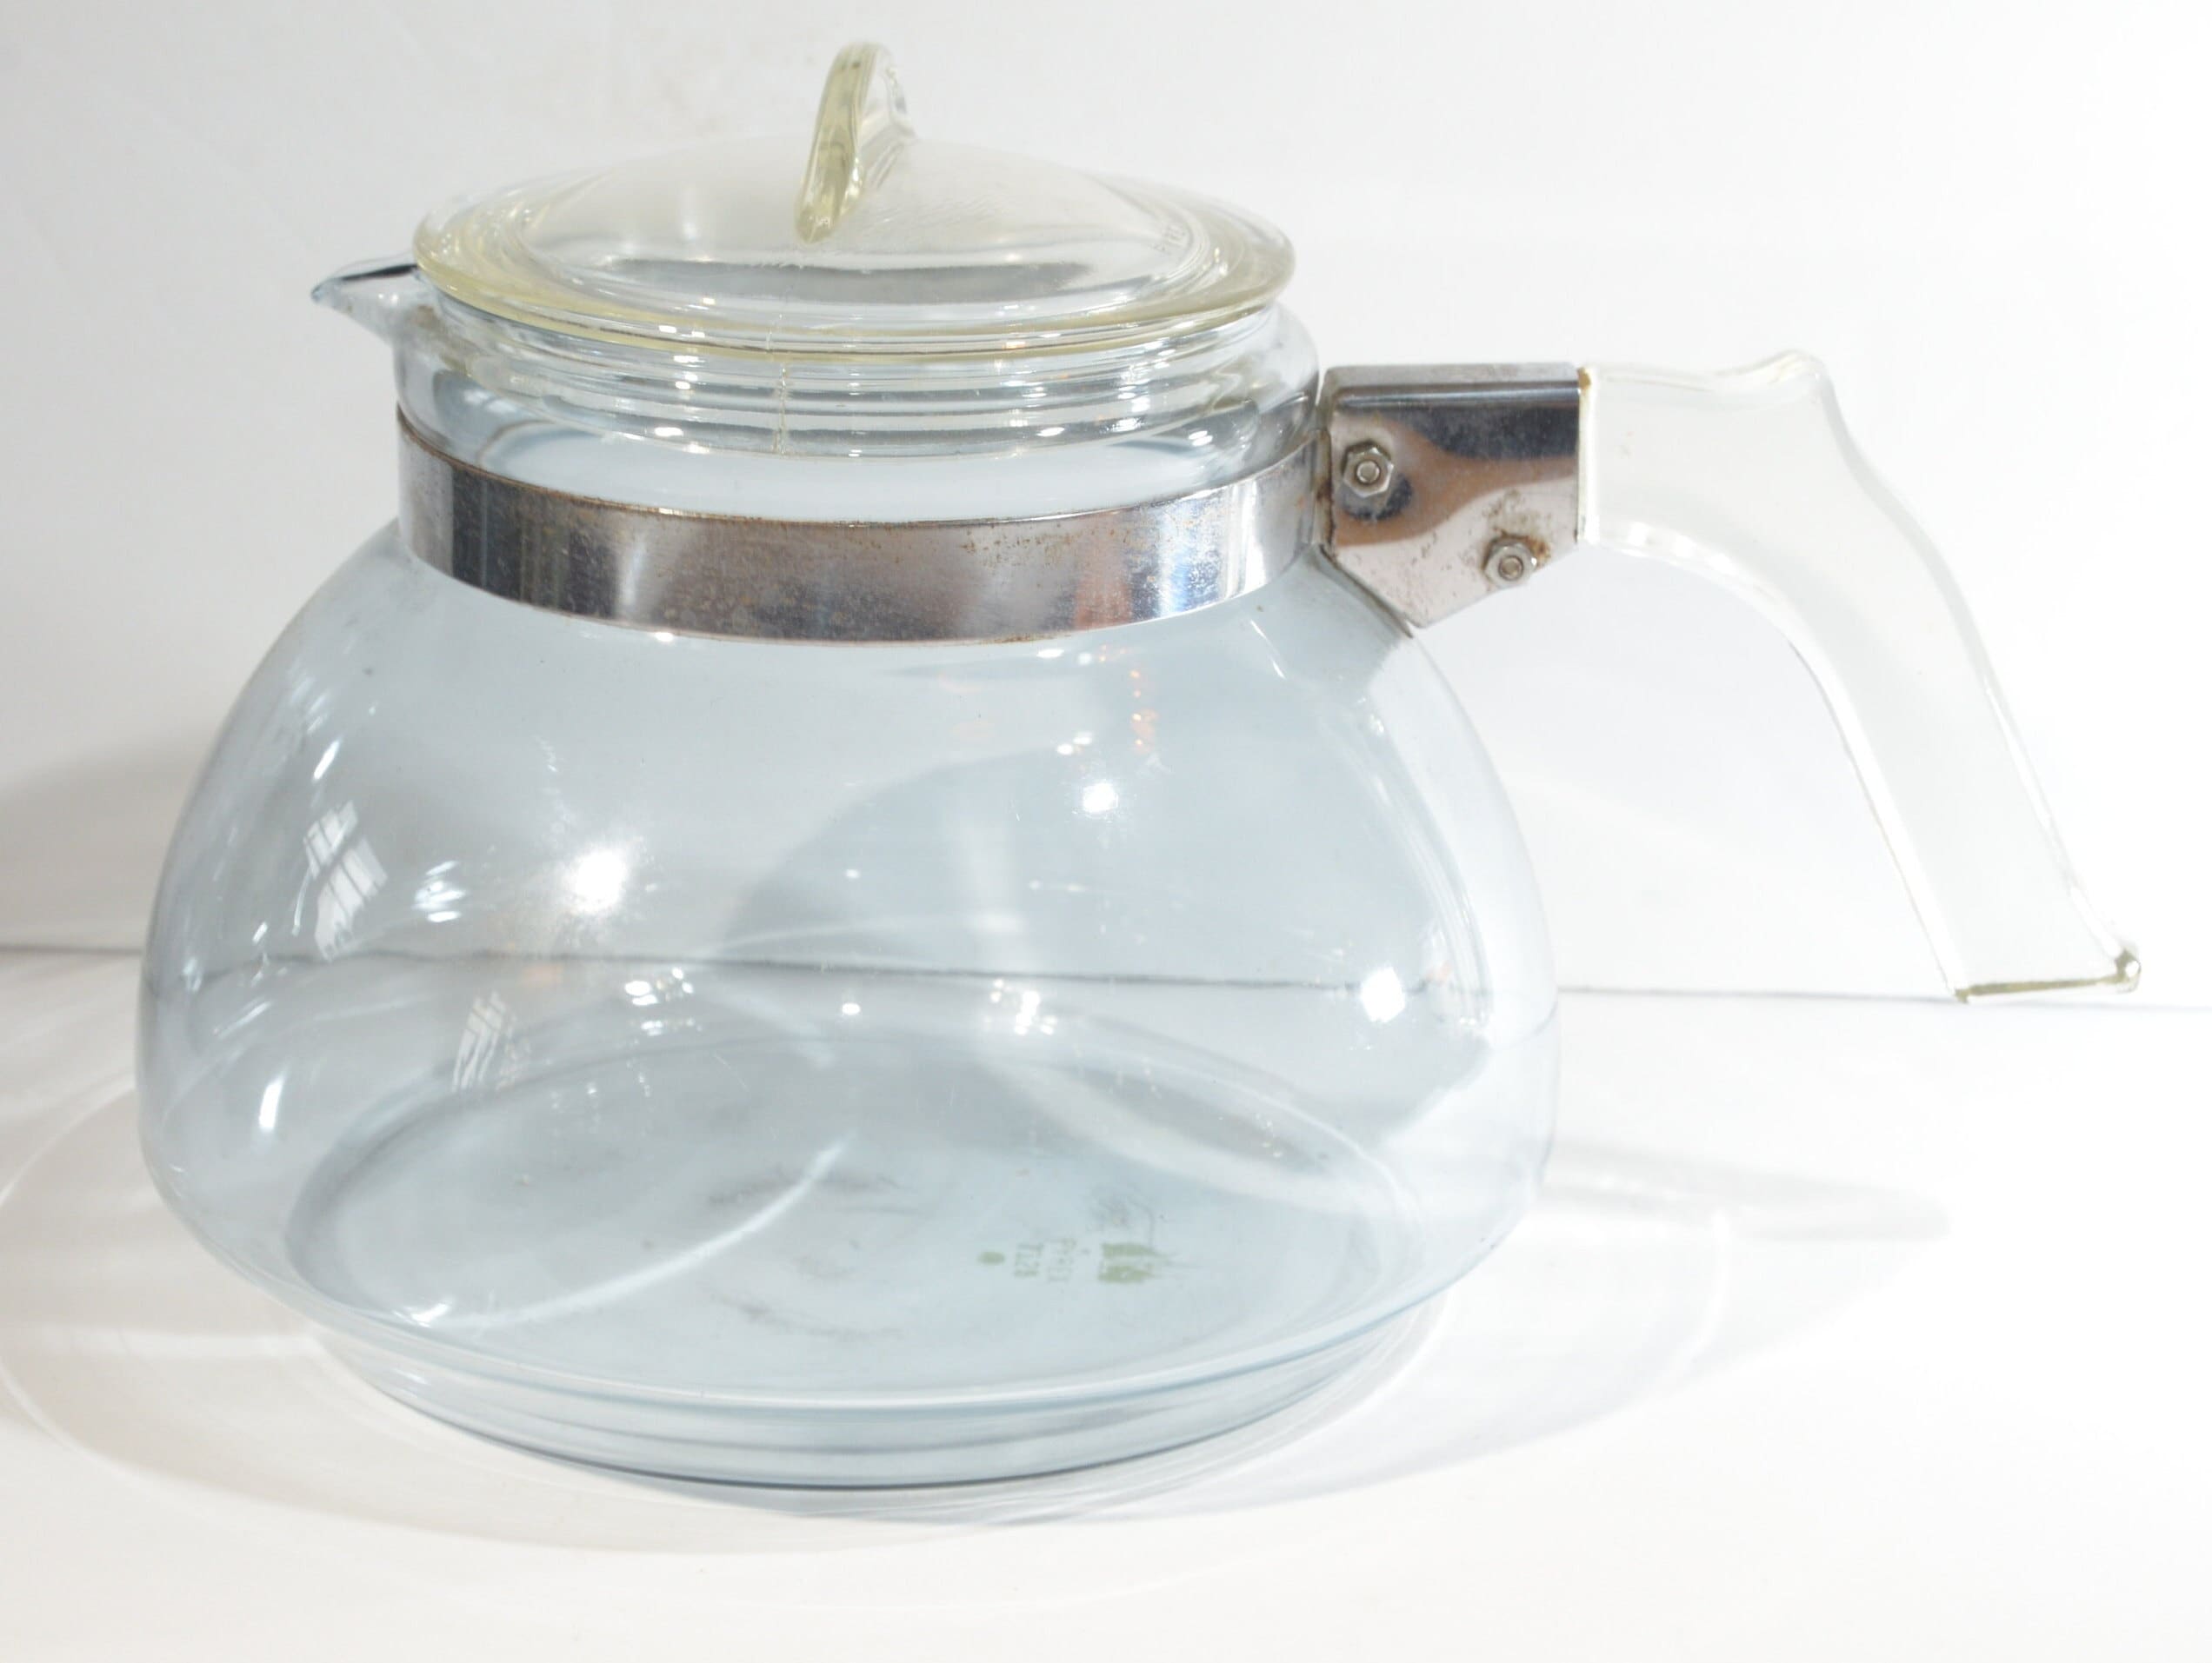 Glass Teapot, Zpose Tea Pot, Teapots, 40oz/1200ml Tea Pots with Scale Line, Tea Pot with Infuser, Borosilicate Glass Teapot for Stovetop Safe, Tea Pot